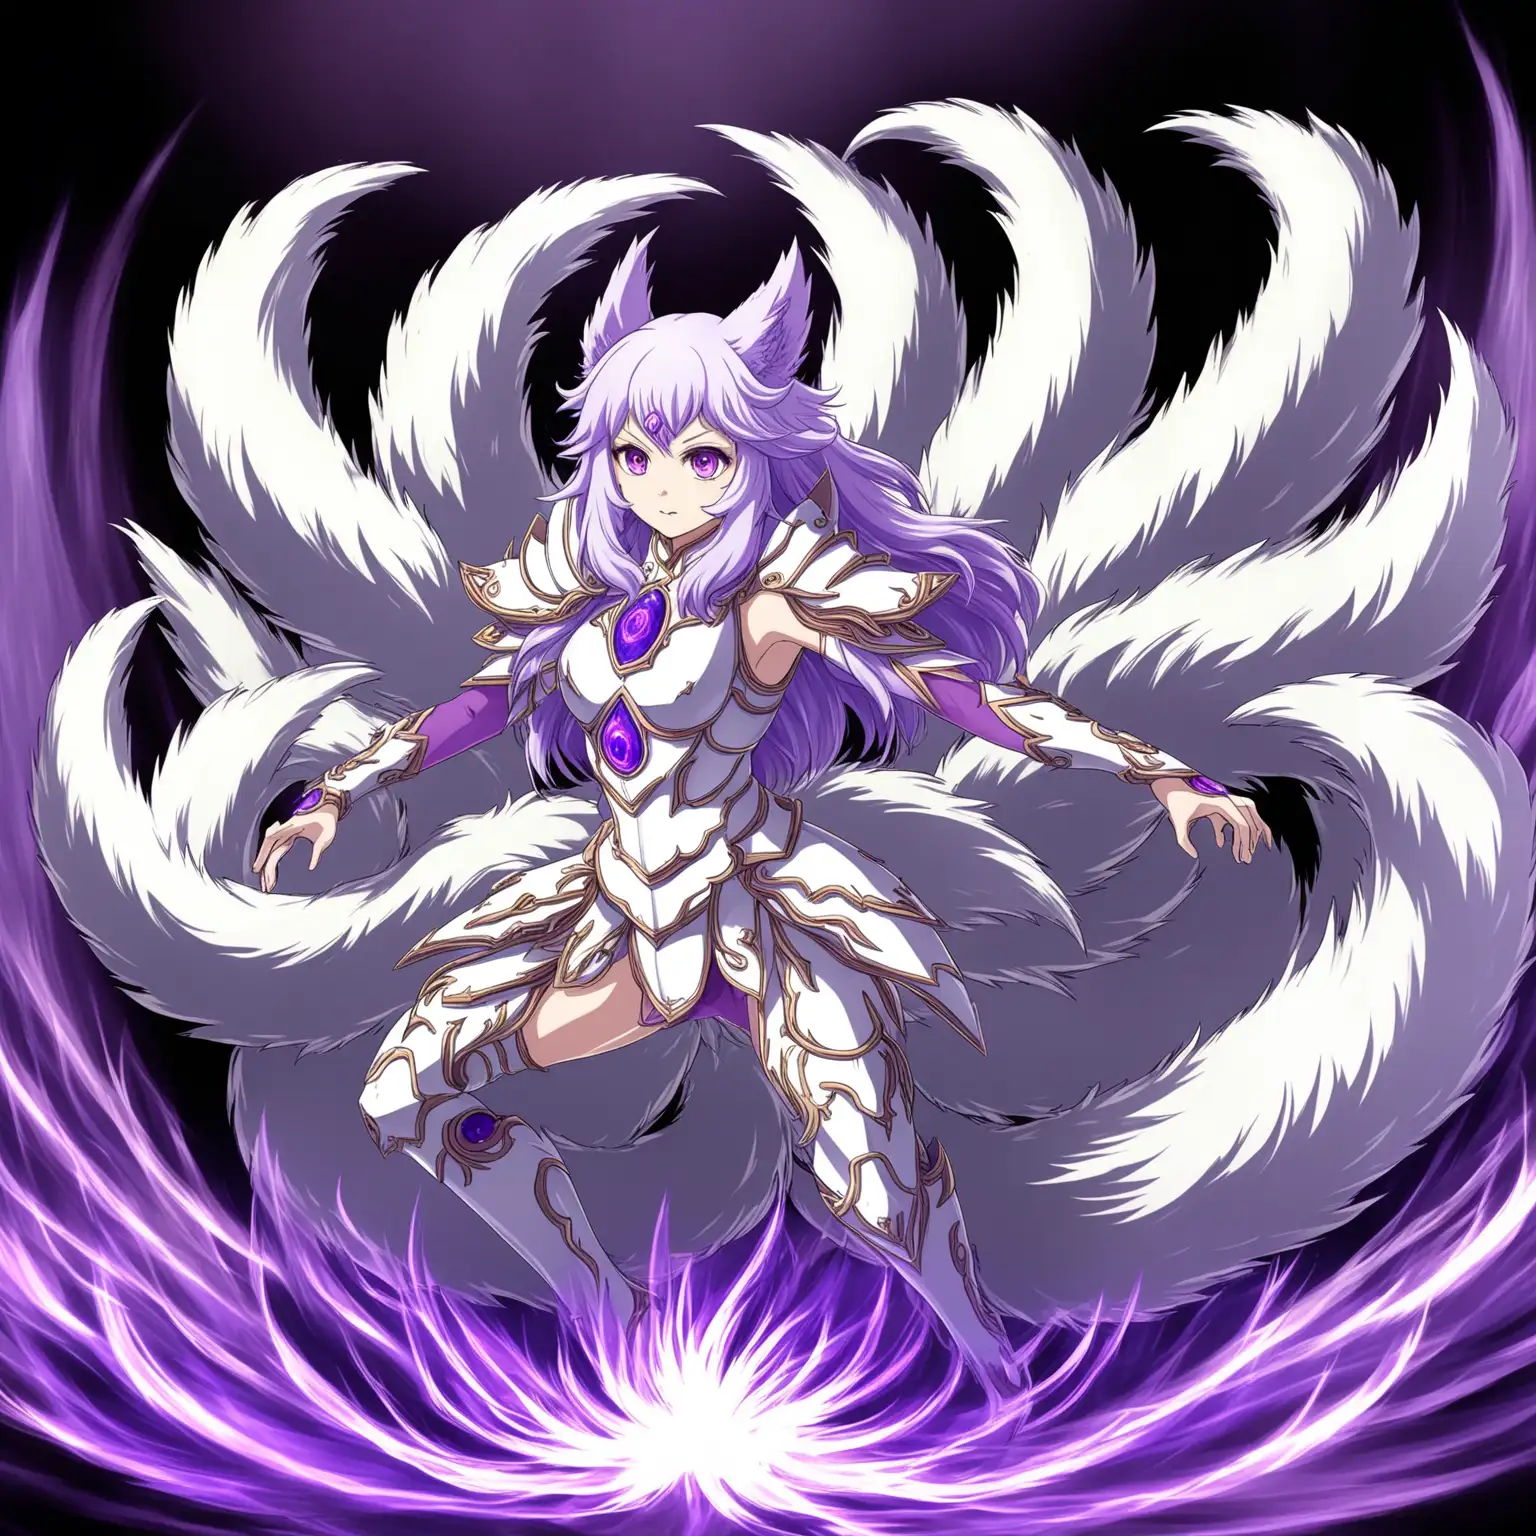 Anime girl, beastkin, purple eyes, white fur, purple aura, nine tails, dynamic pose, white armor